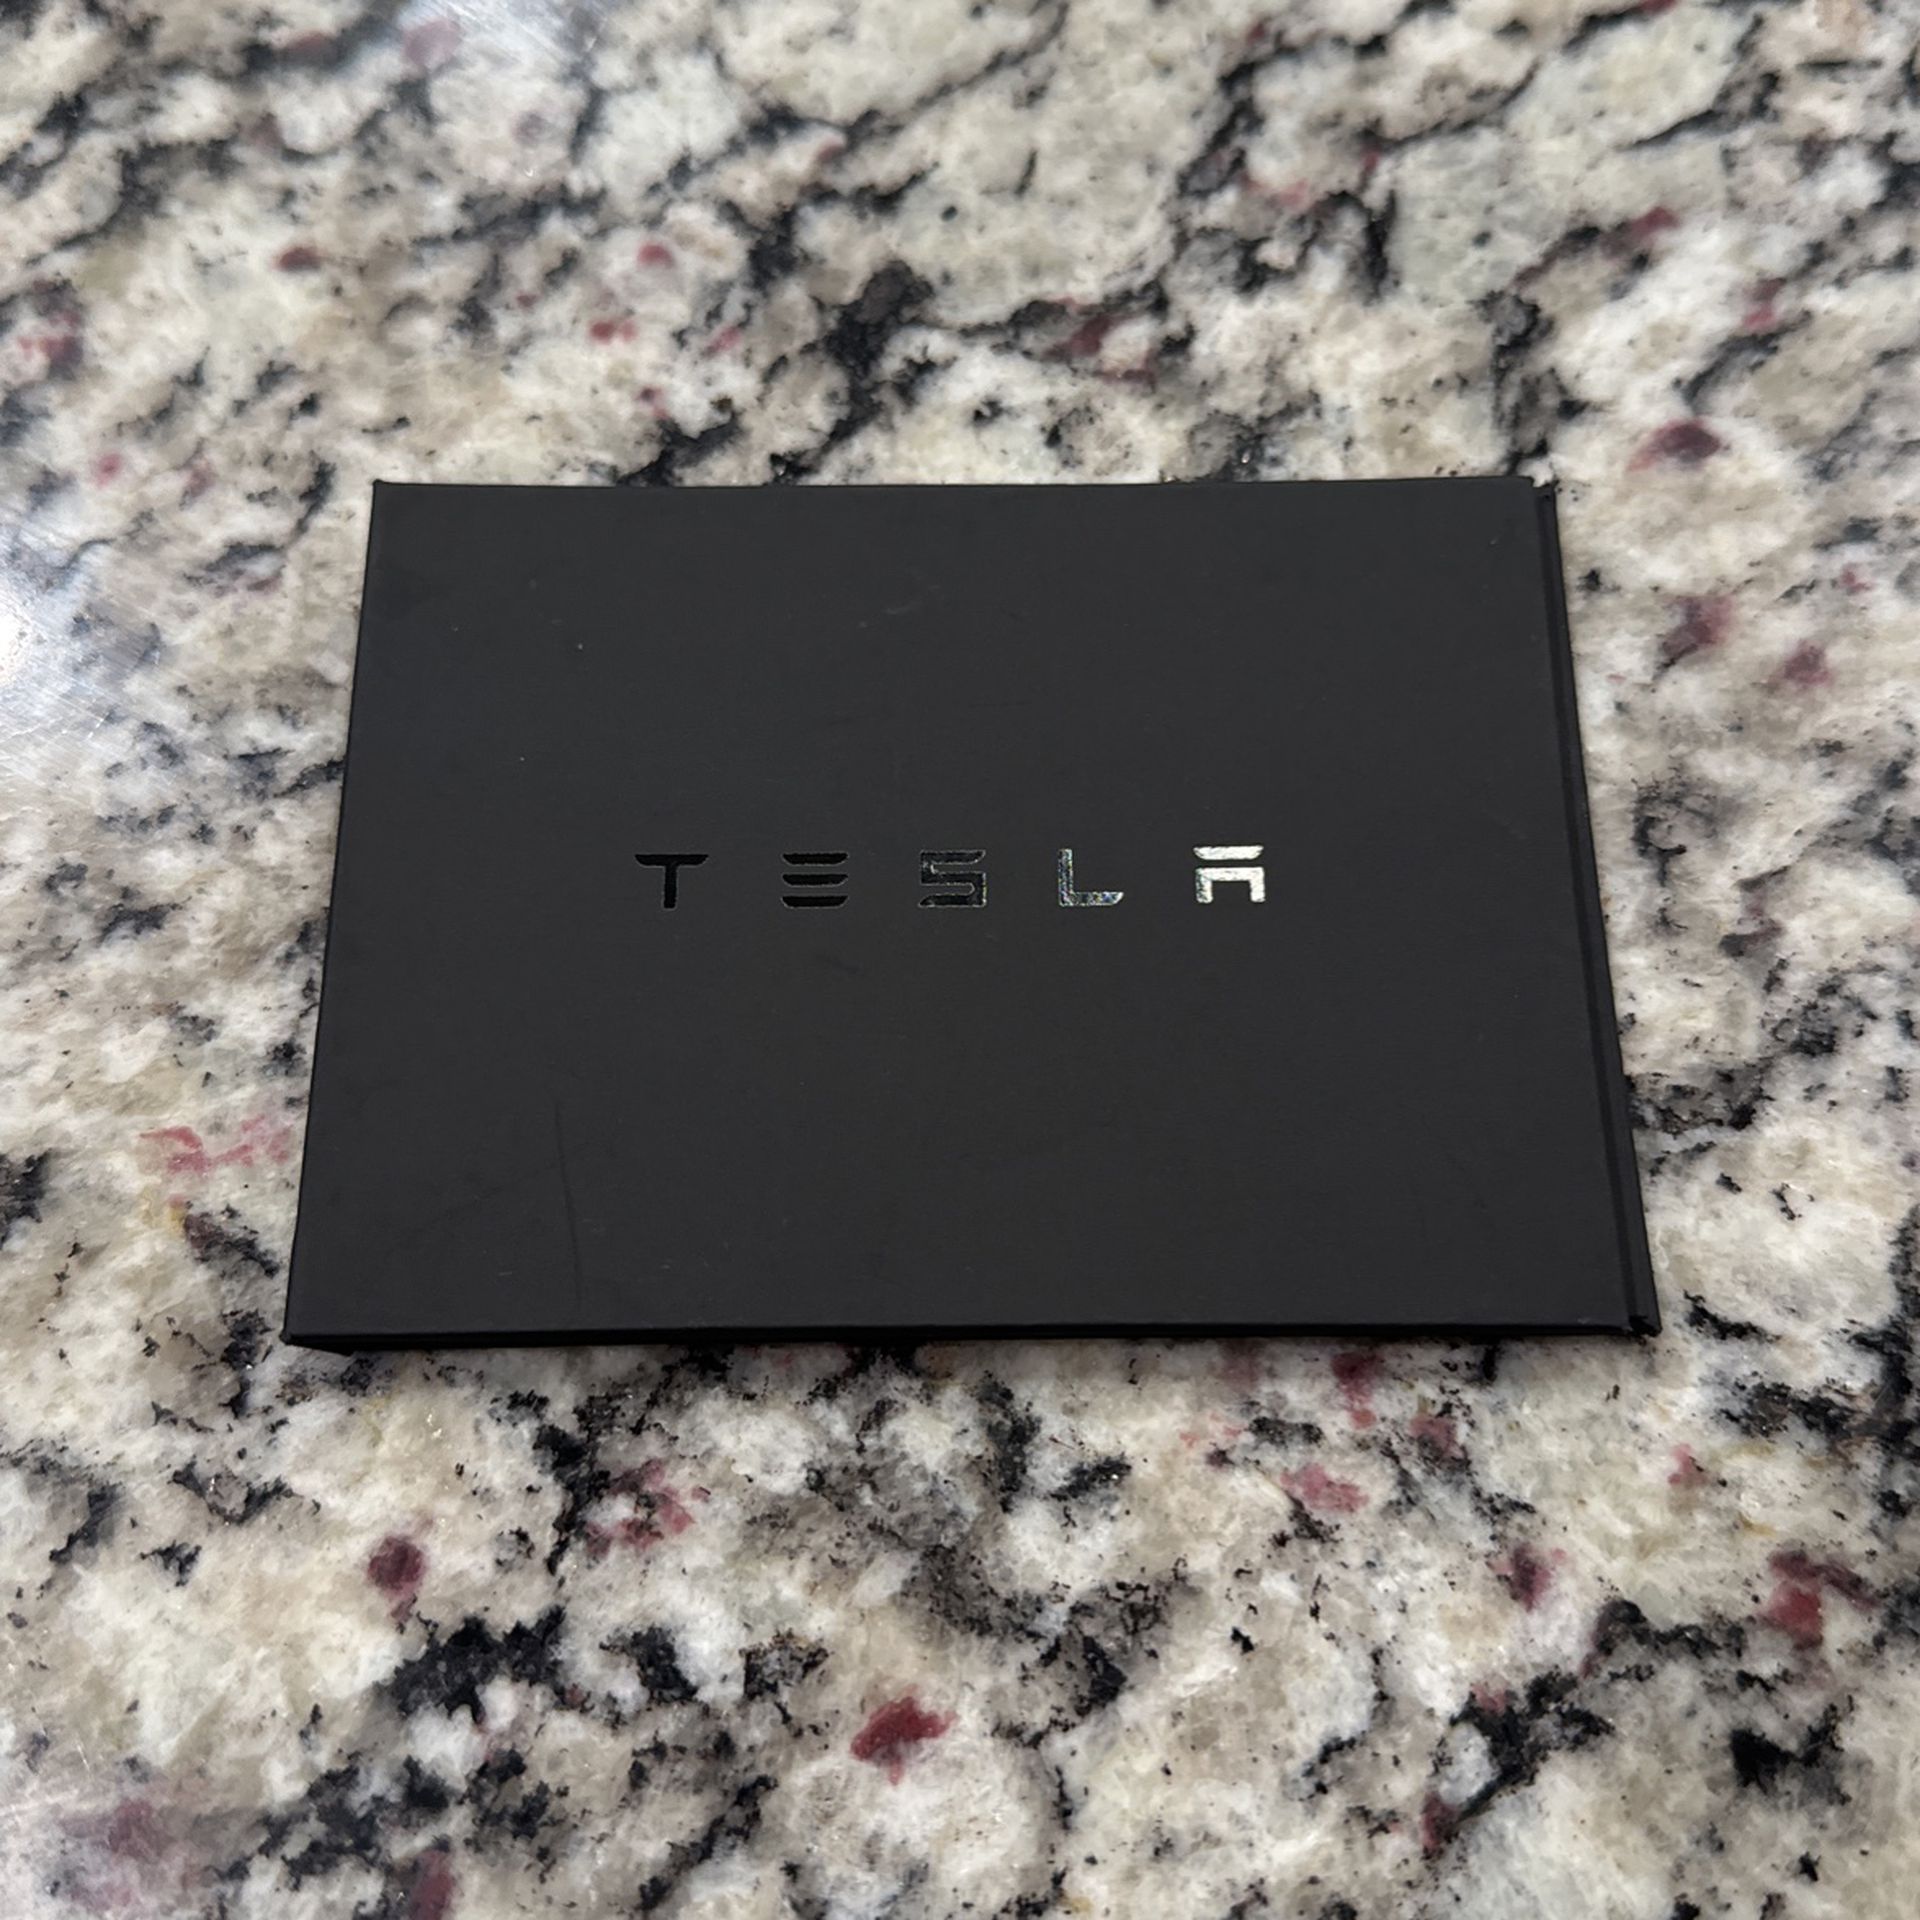 Tesla Card Keys with Wallet 